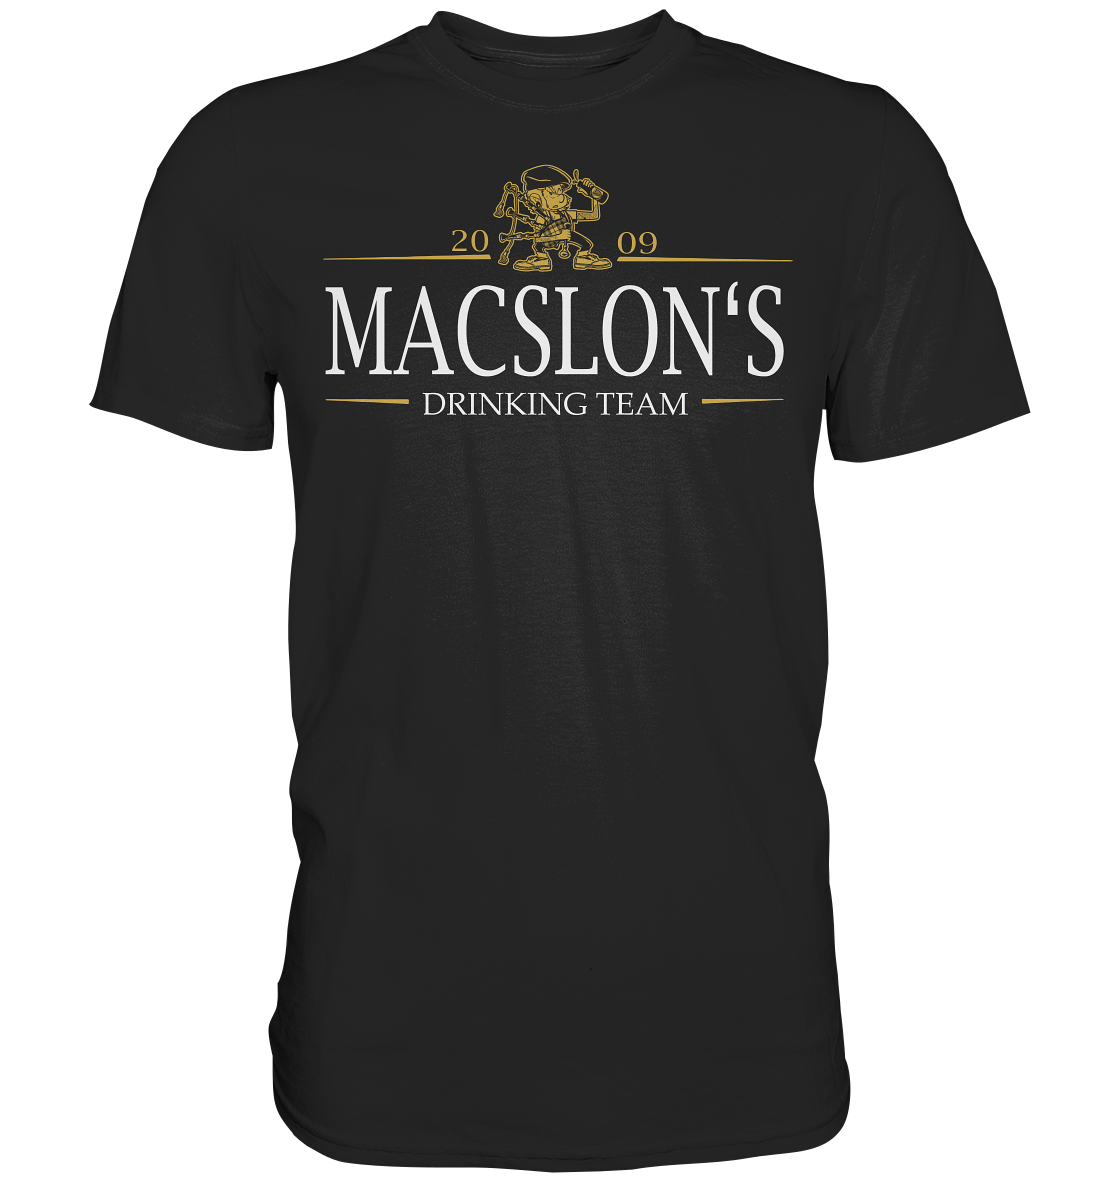 MacSlon's "Drinking Team" - Premium Shirt